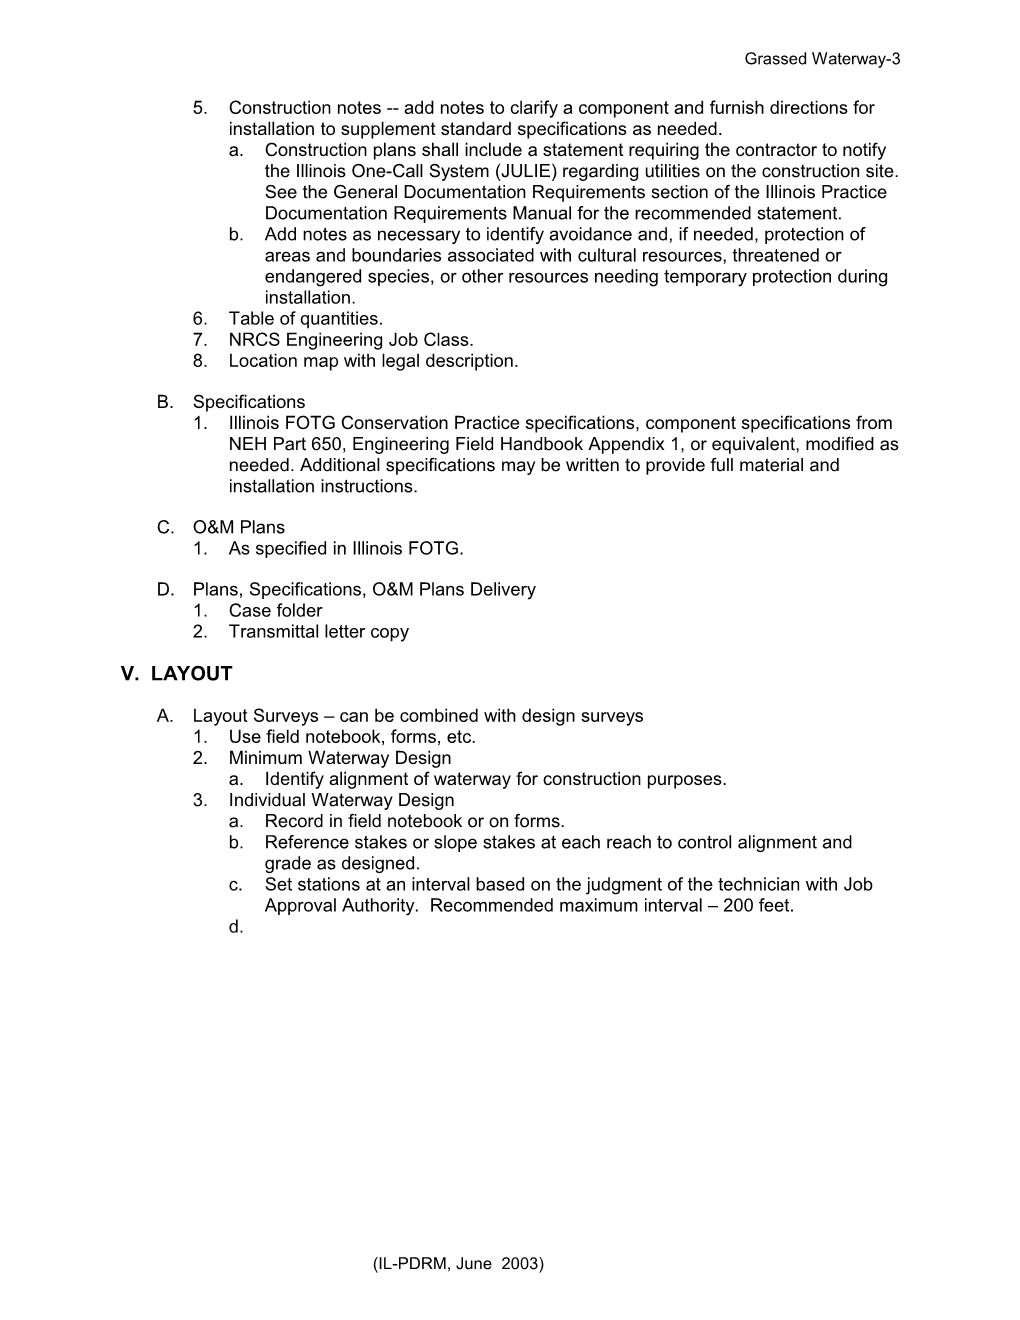 Illinois Practice Documentation Requirements